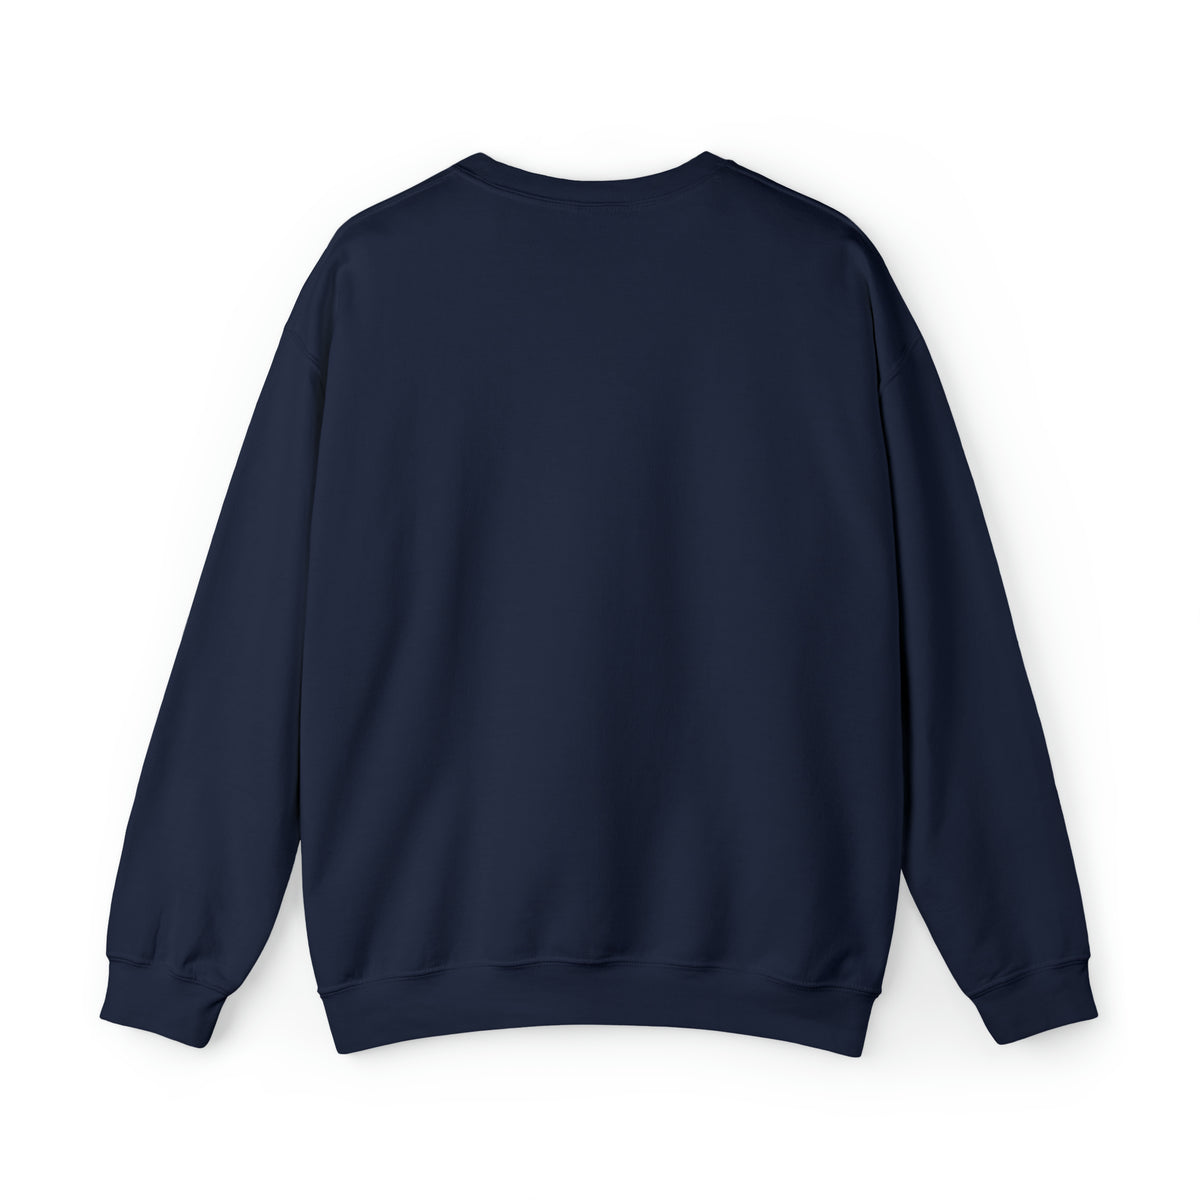 All American Dad - Unisex Heavy Blend™ Crewneck Sweatshirt